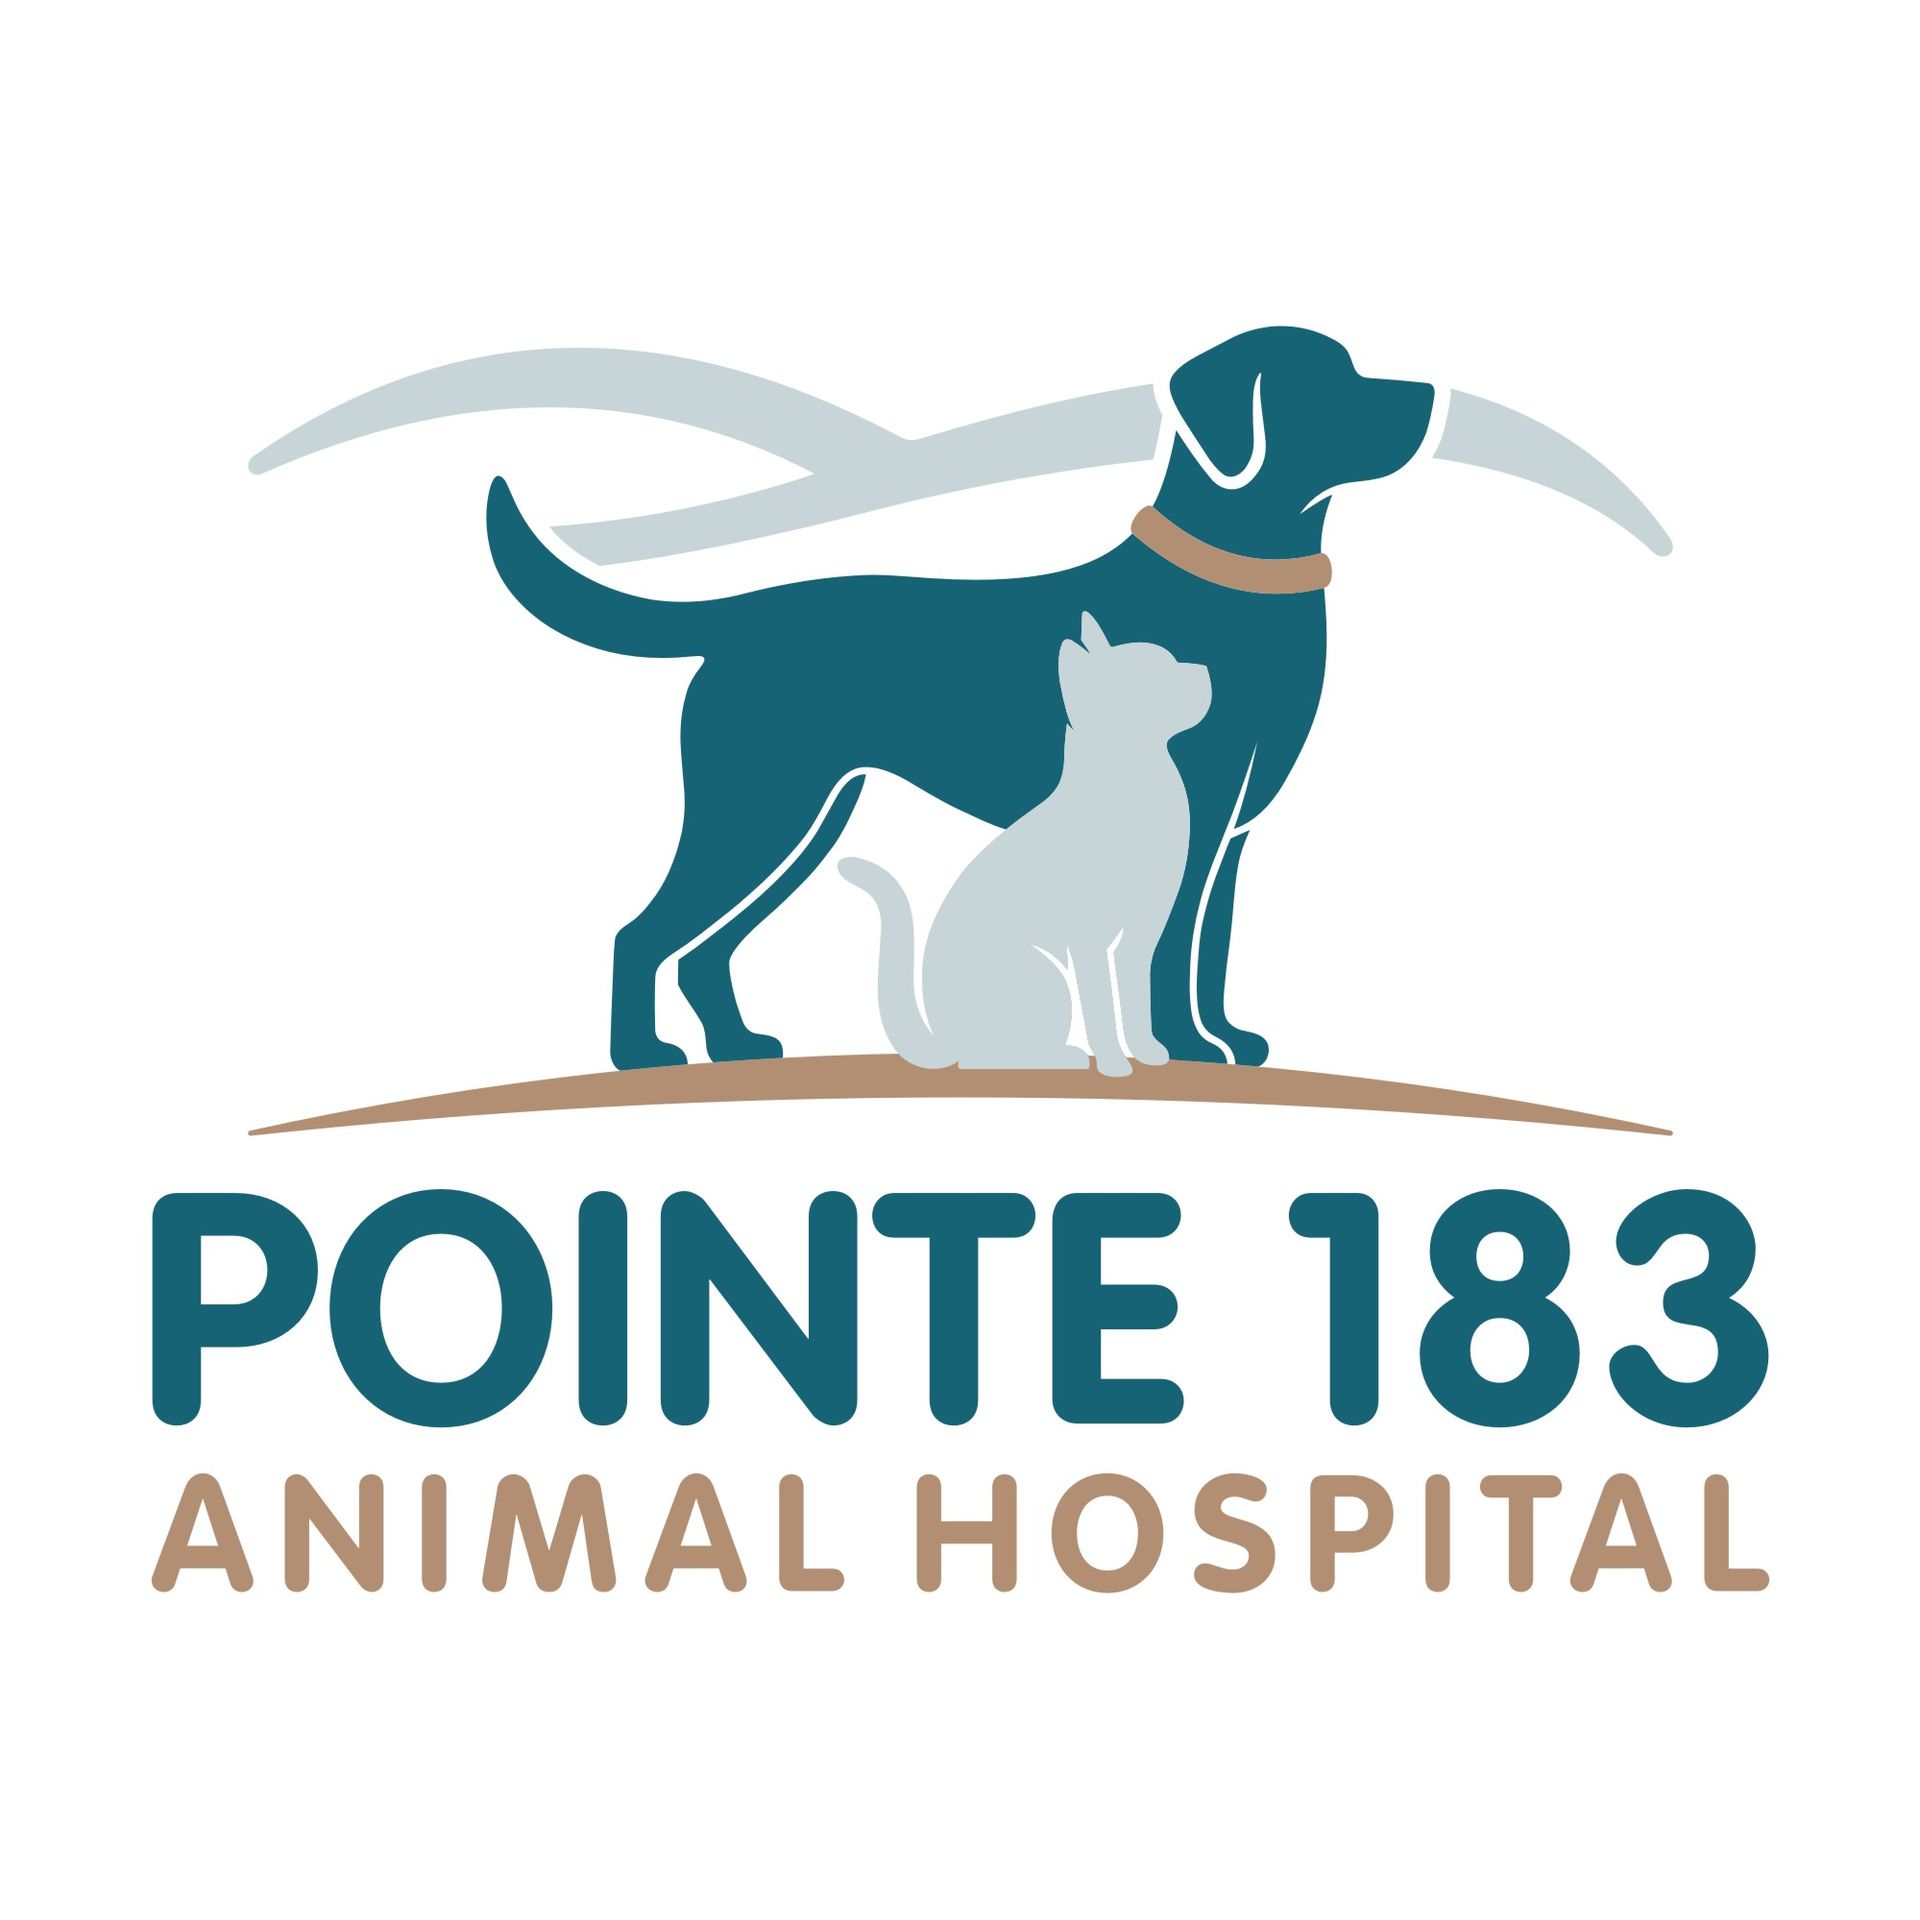 Pointe 183 Animal Hospital logo